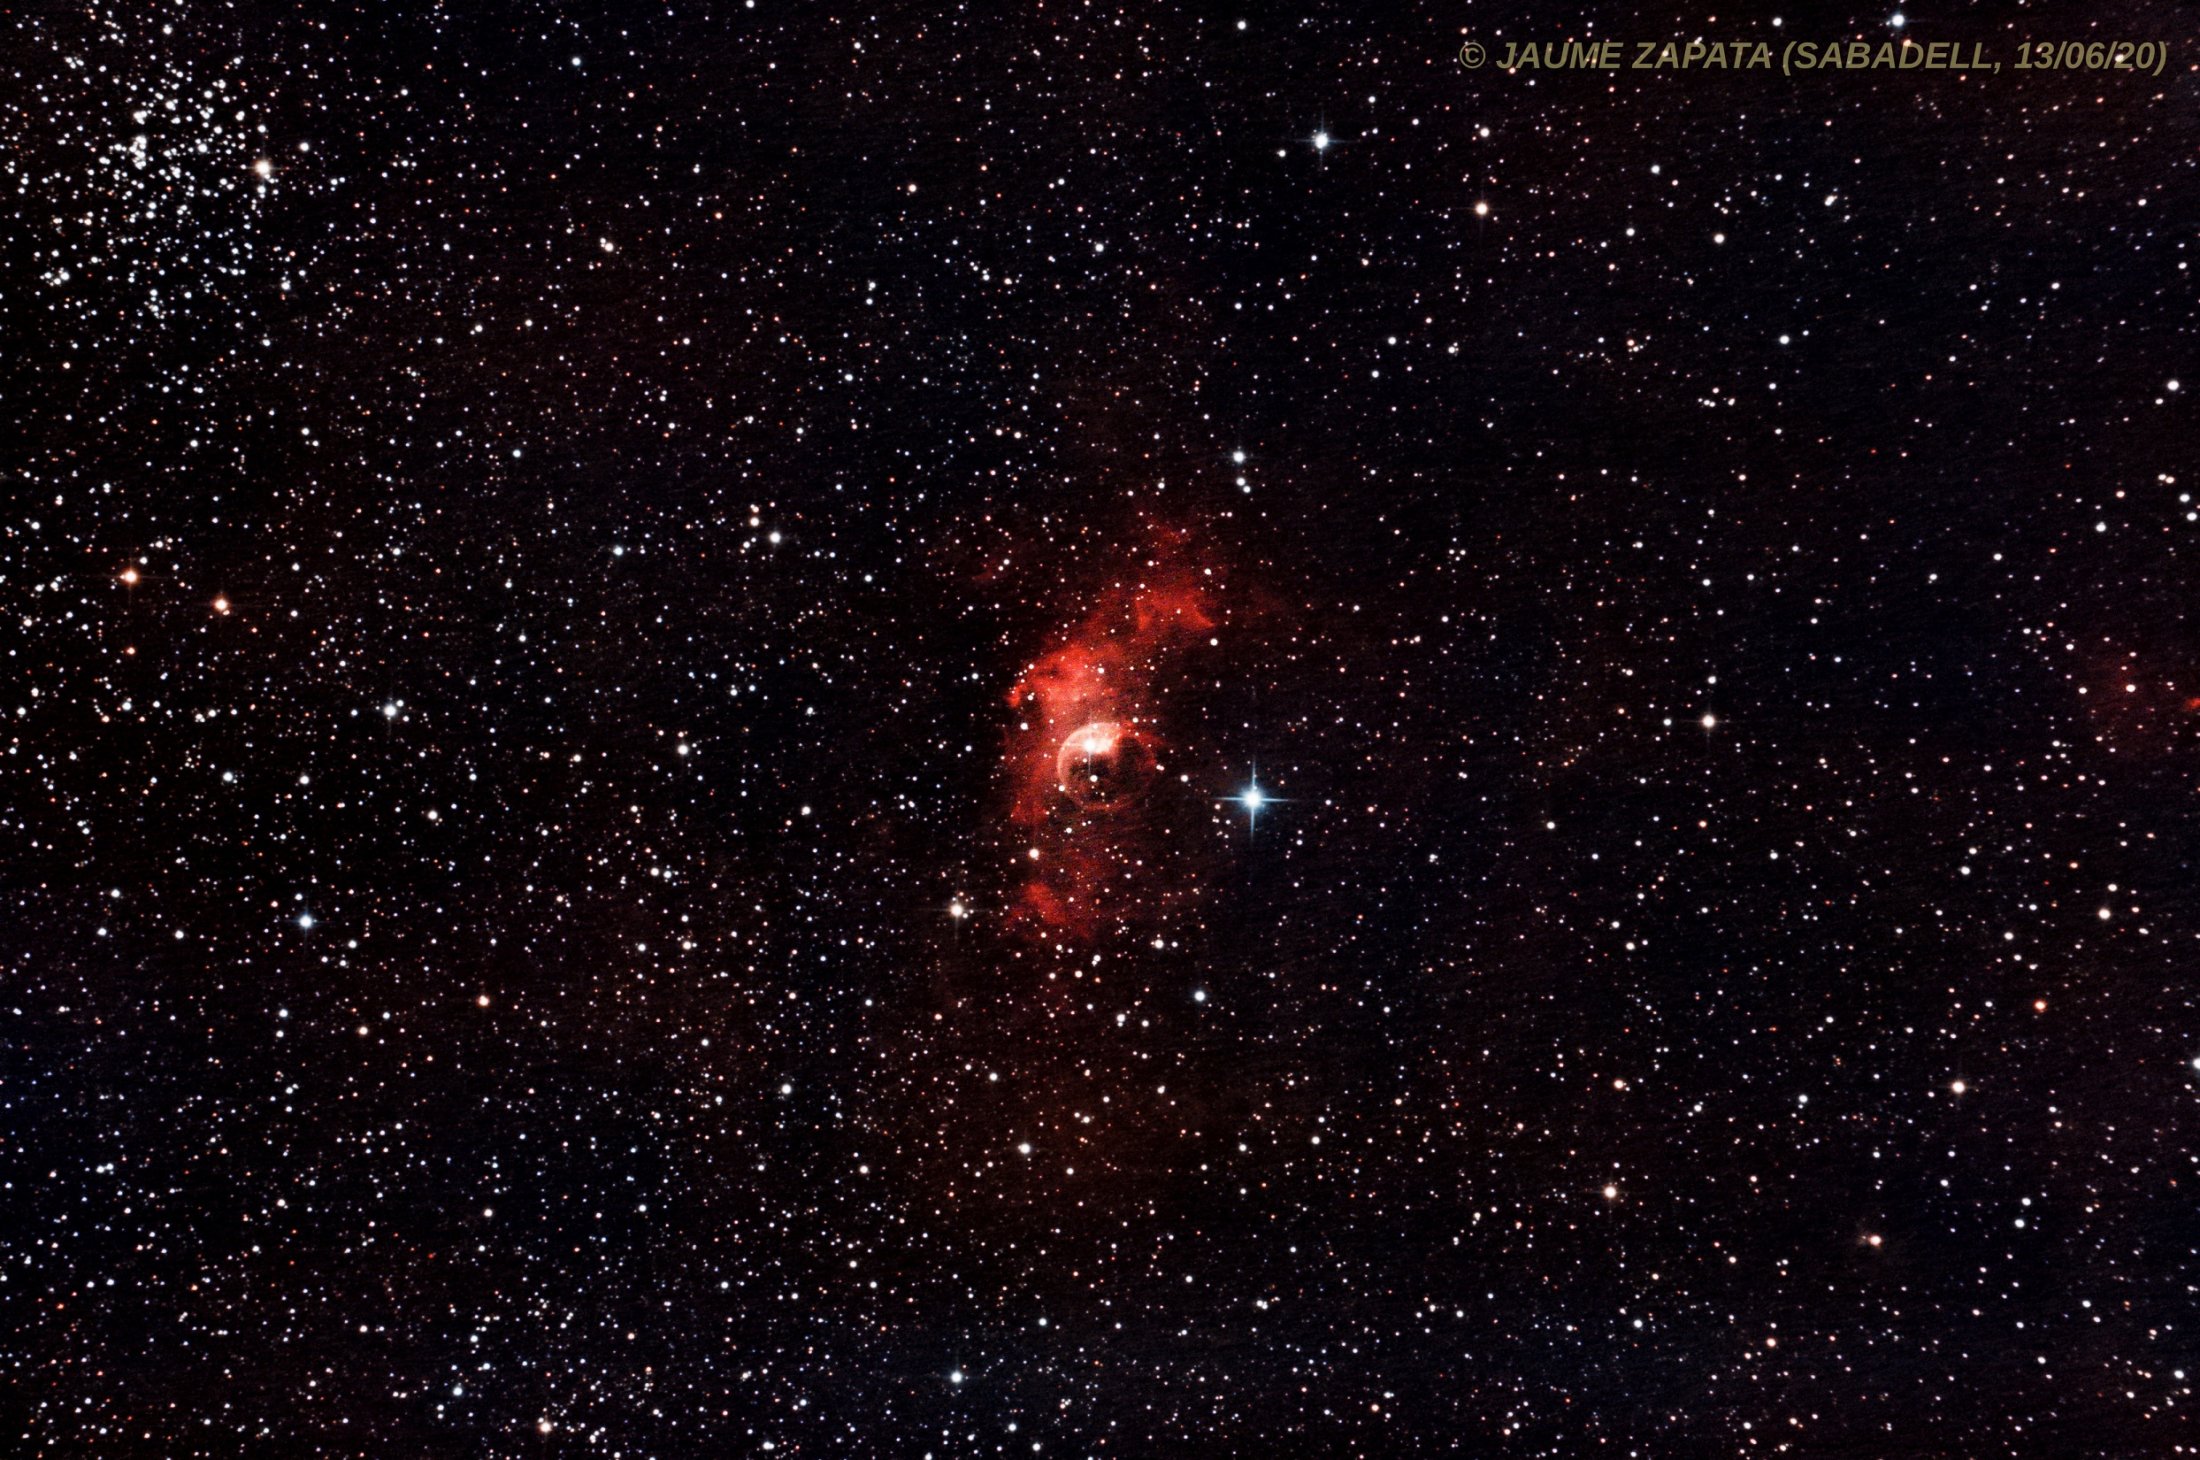 NGC7635 - Jaume Zapata